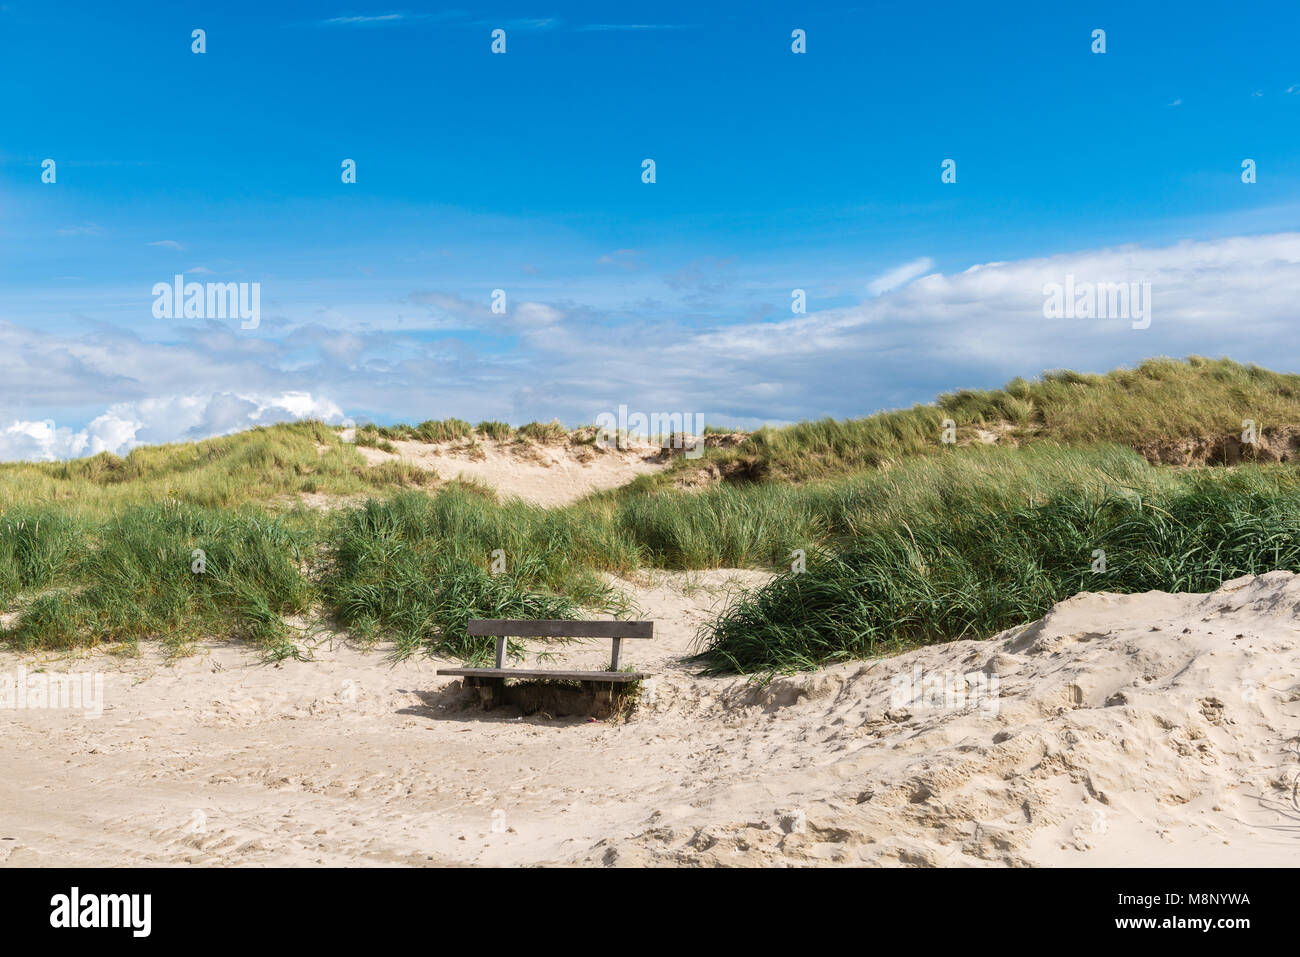 Dunes at Rindby Beach on Fanoe Island, North Sea, Jutland, Denmark, Scandinavia Stock Photo